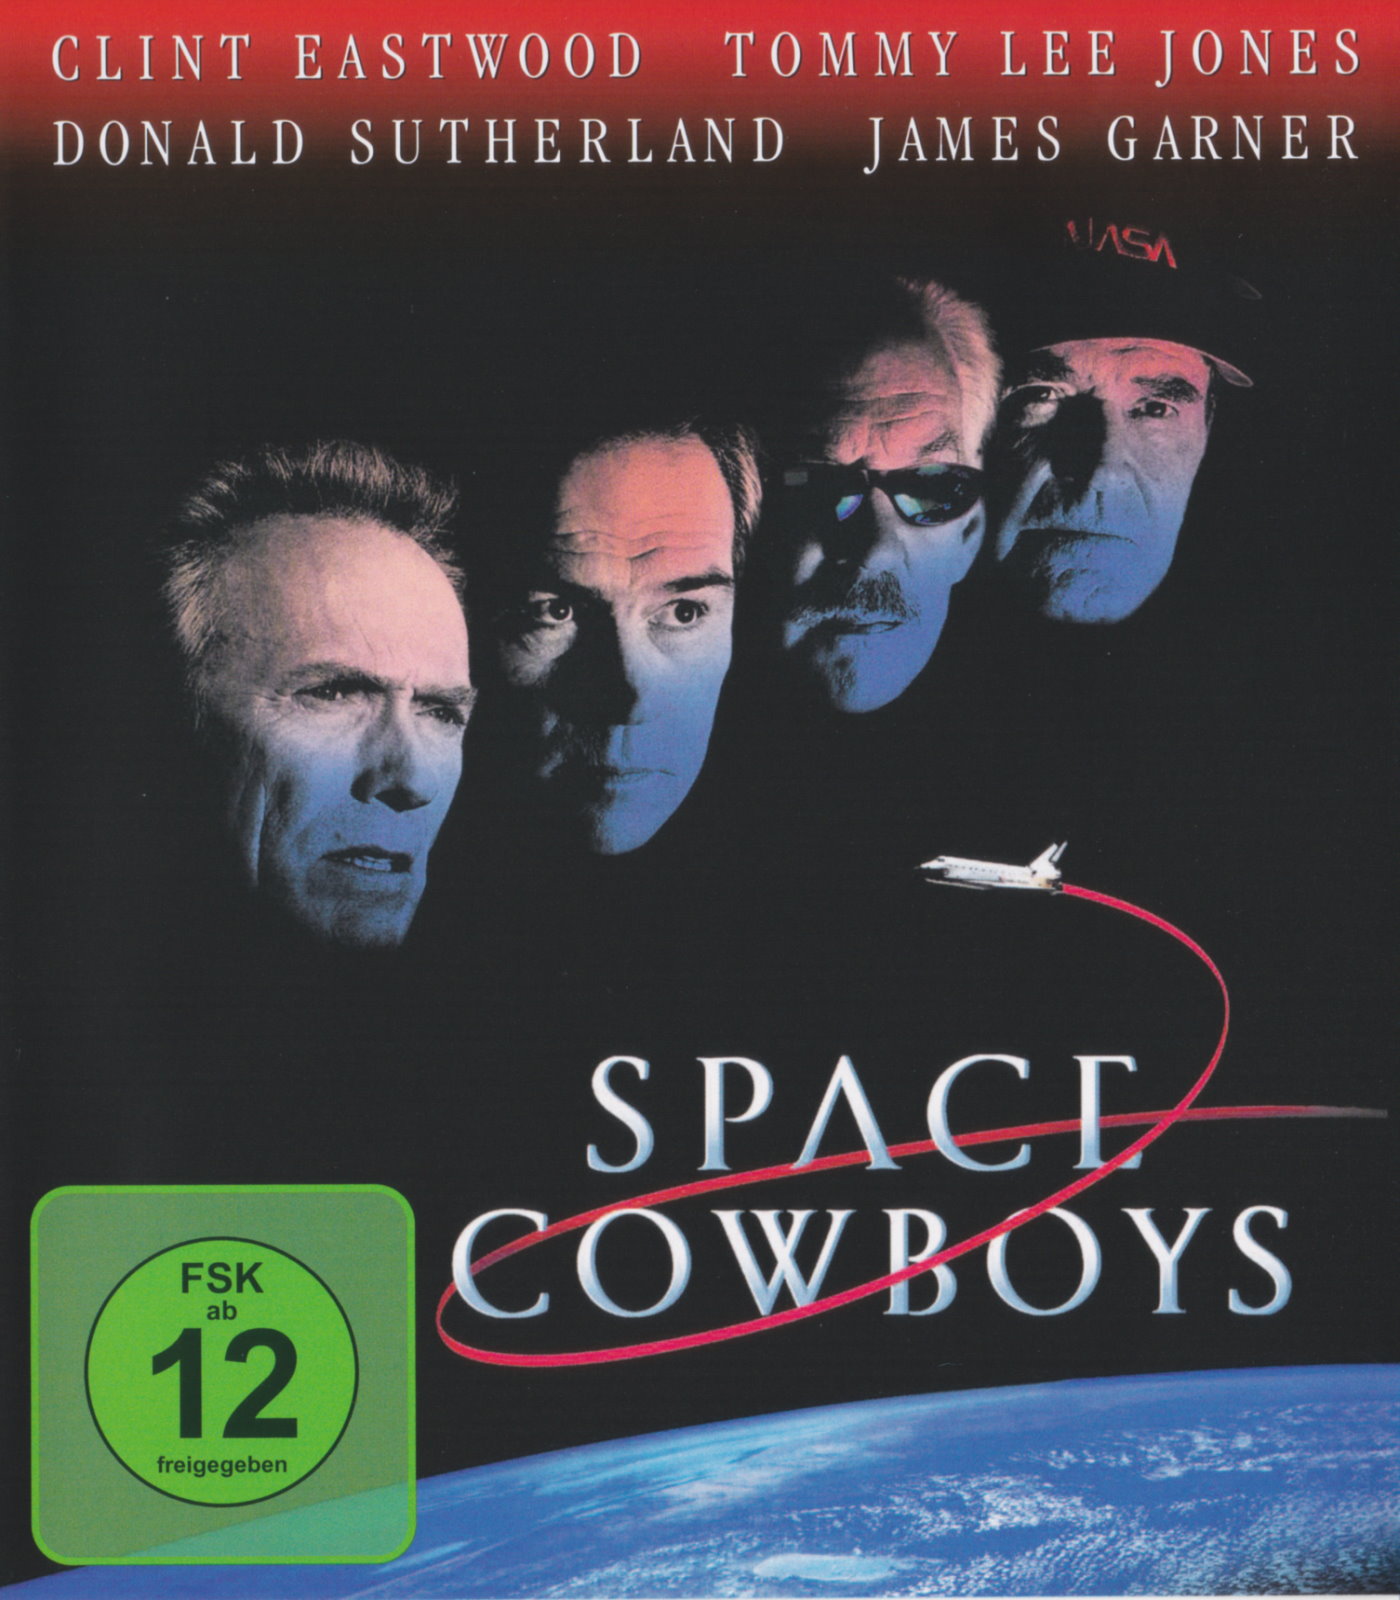 Cover - Space Cowboys.jpg